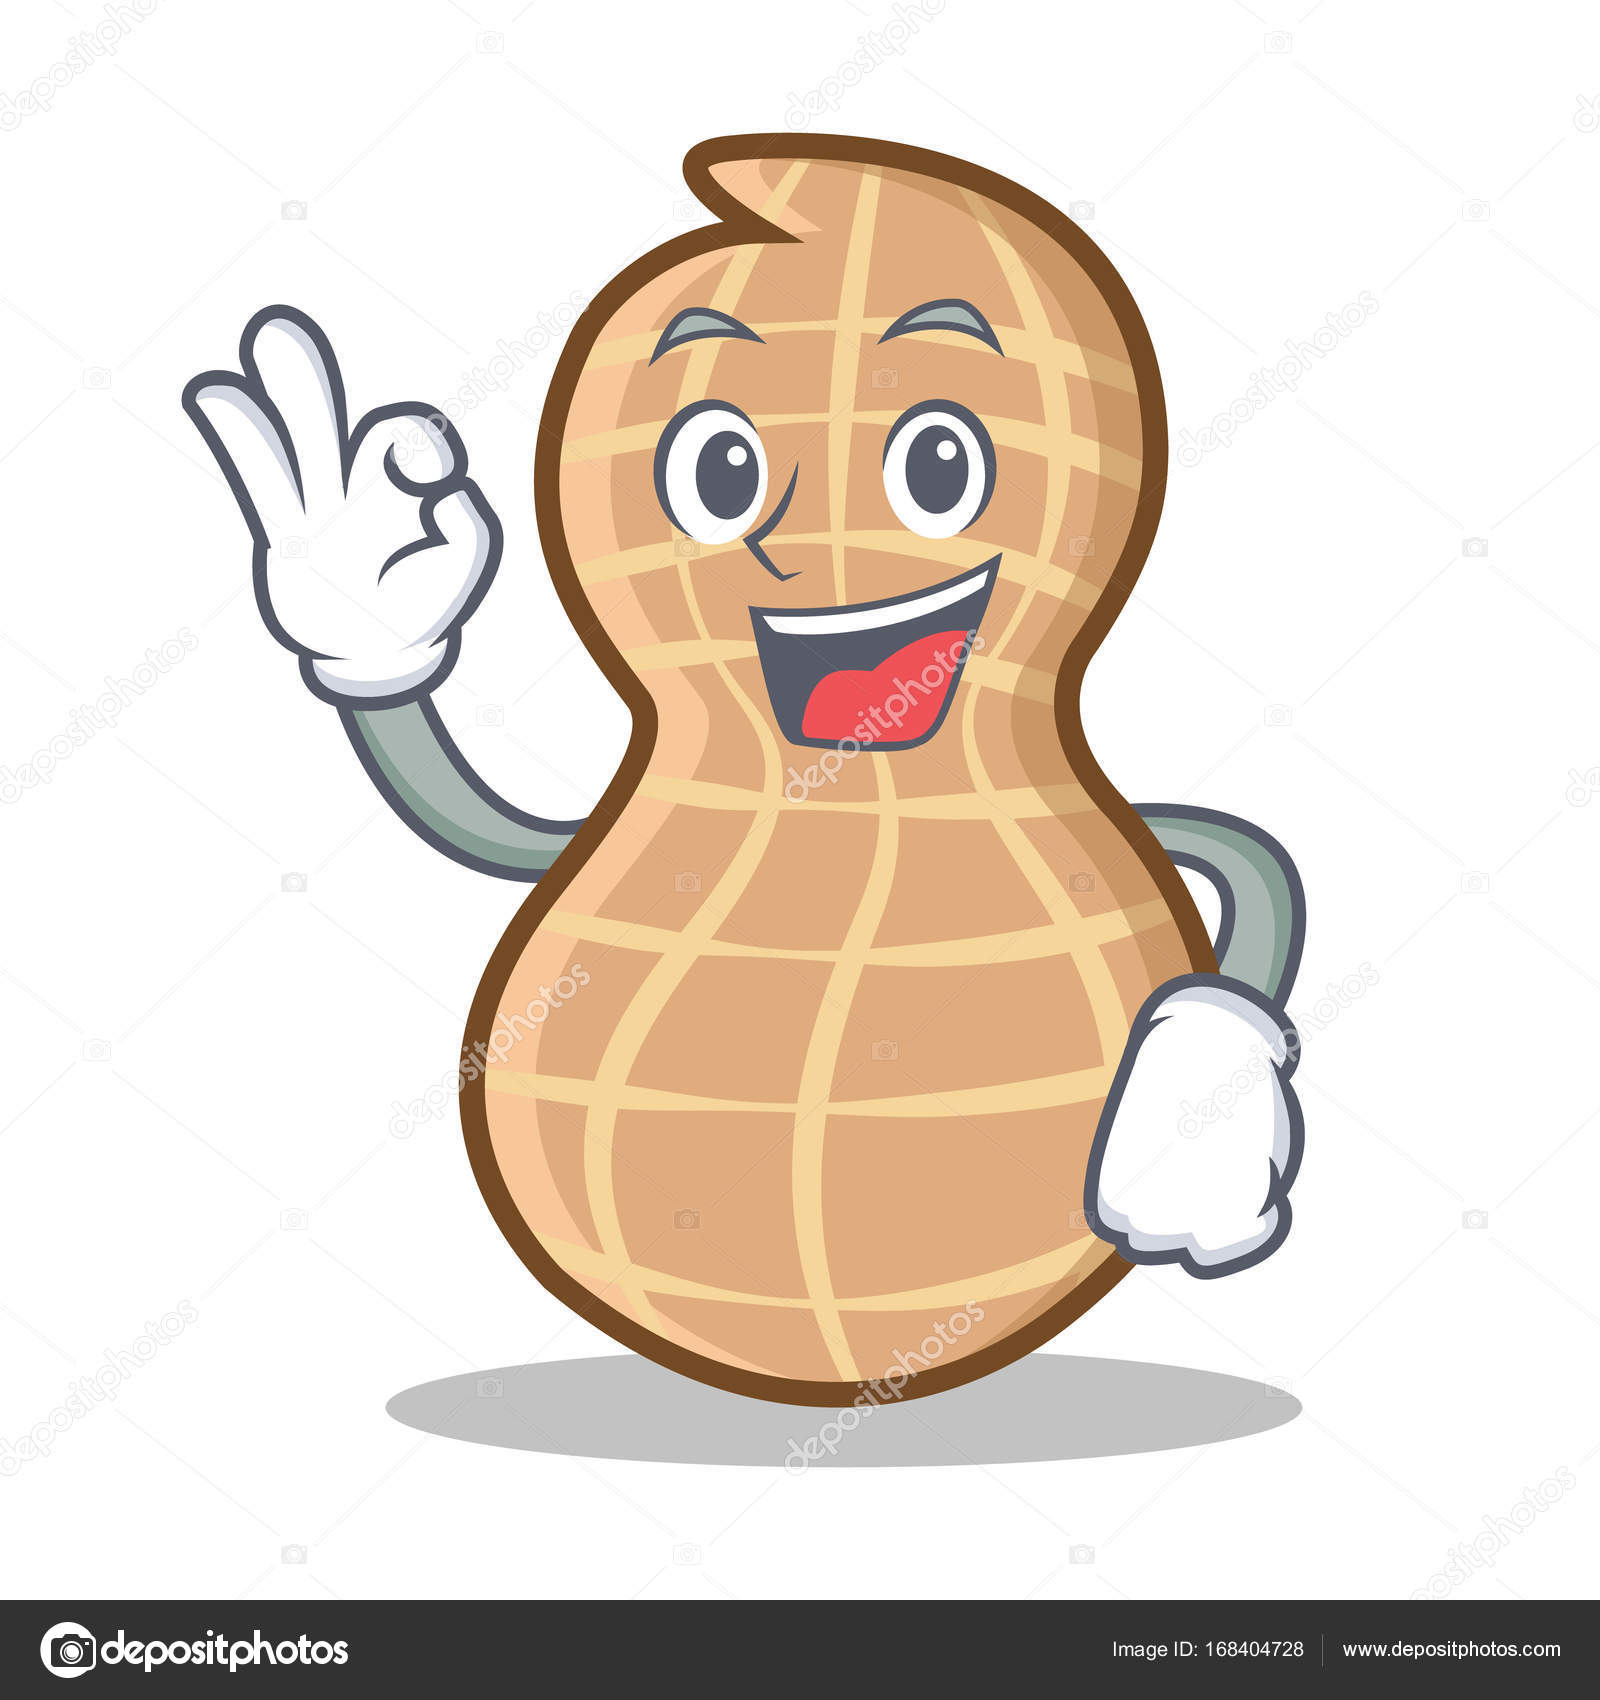 https://st3.depositphotos.com/9034578/16840/v/1600/depositphotos_168404728-stock-illustration-okay-peanut-character-cartoon-style.jpg